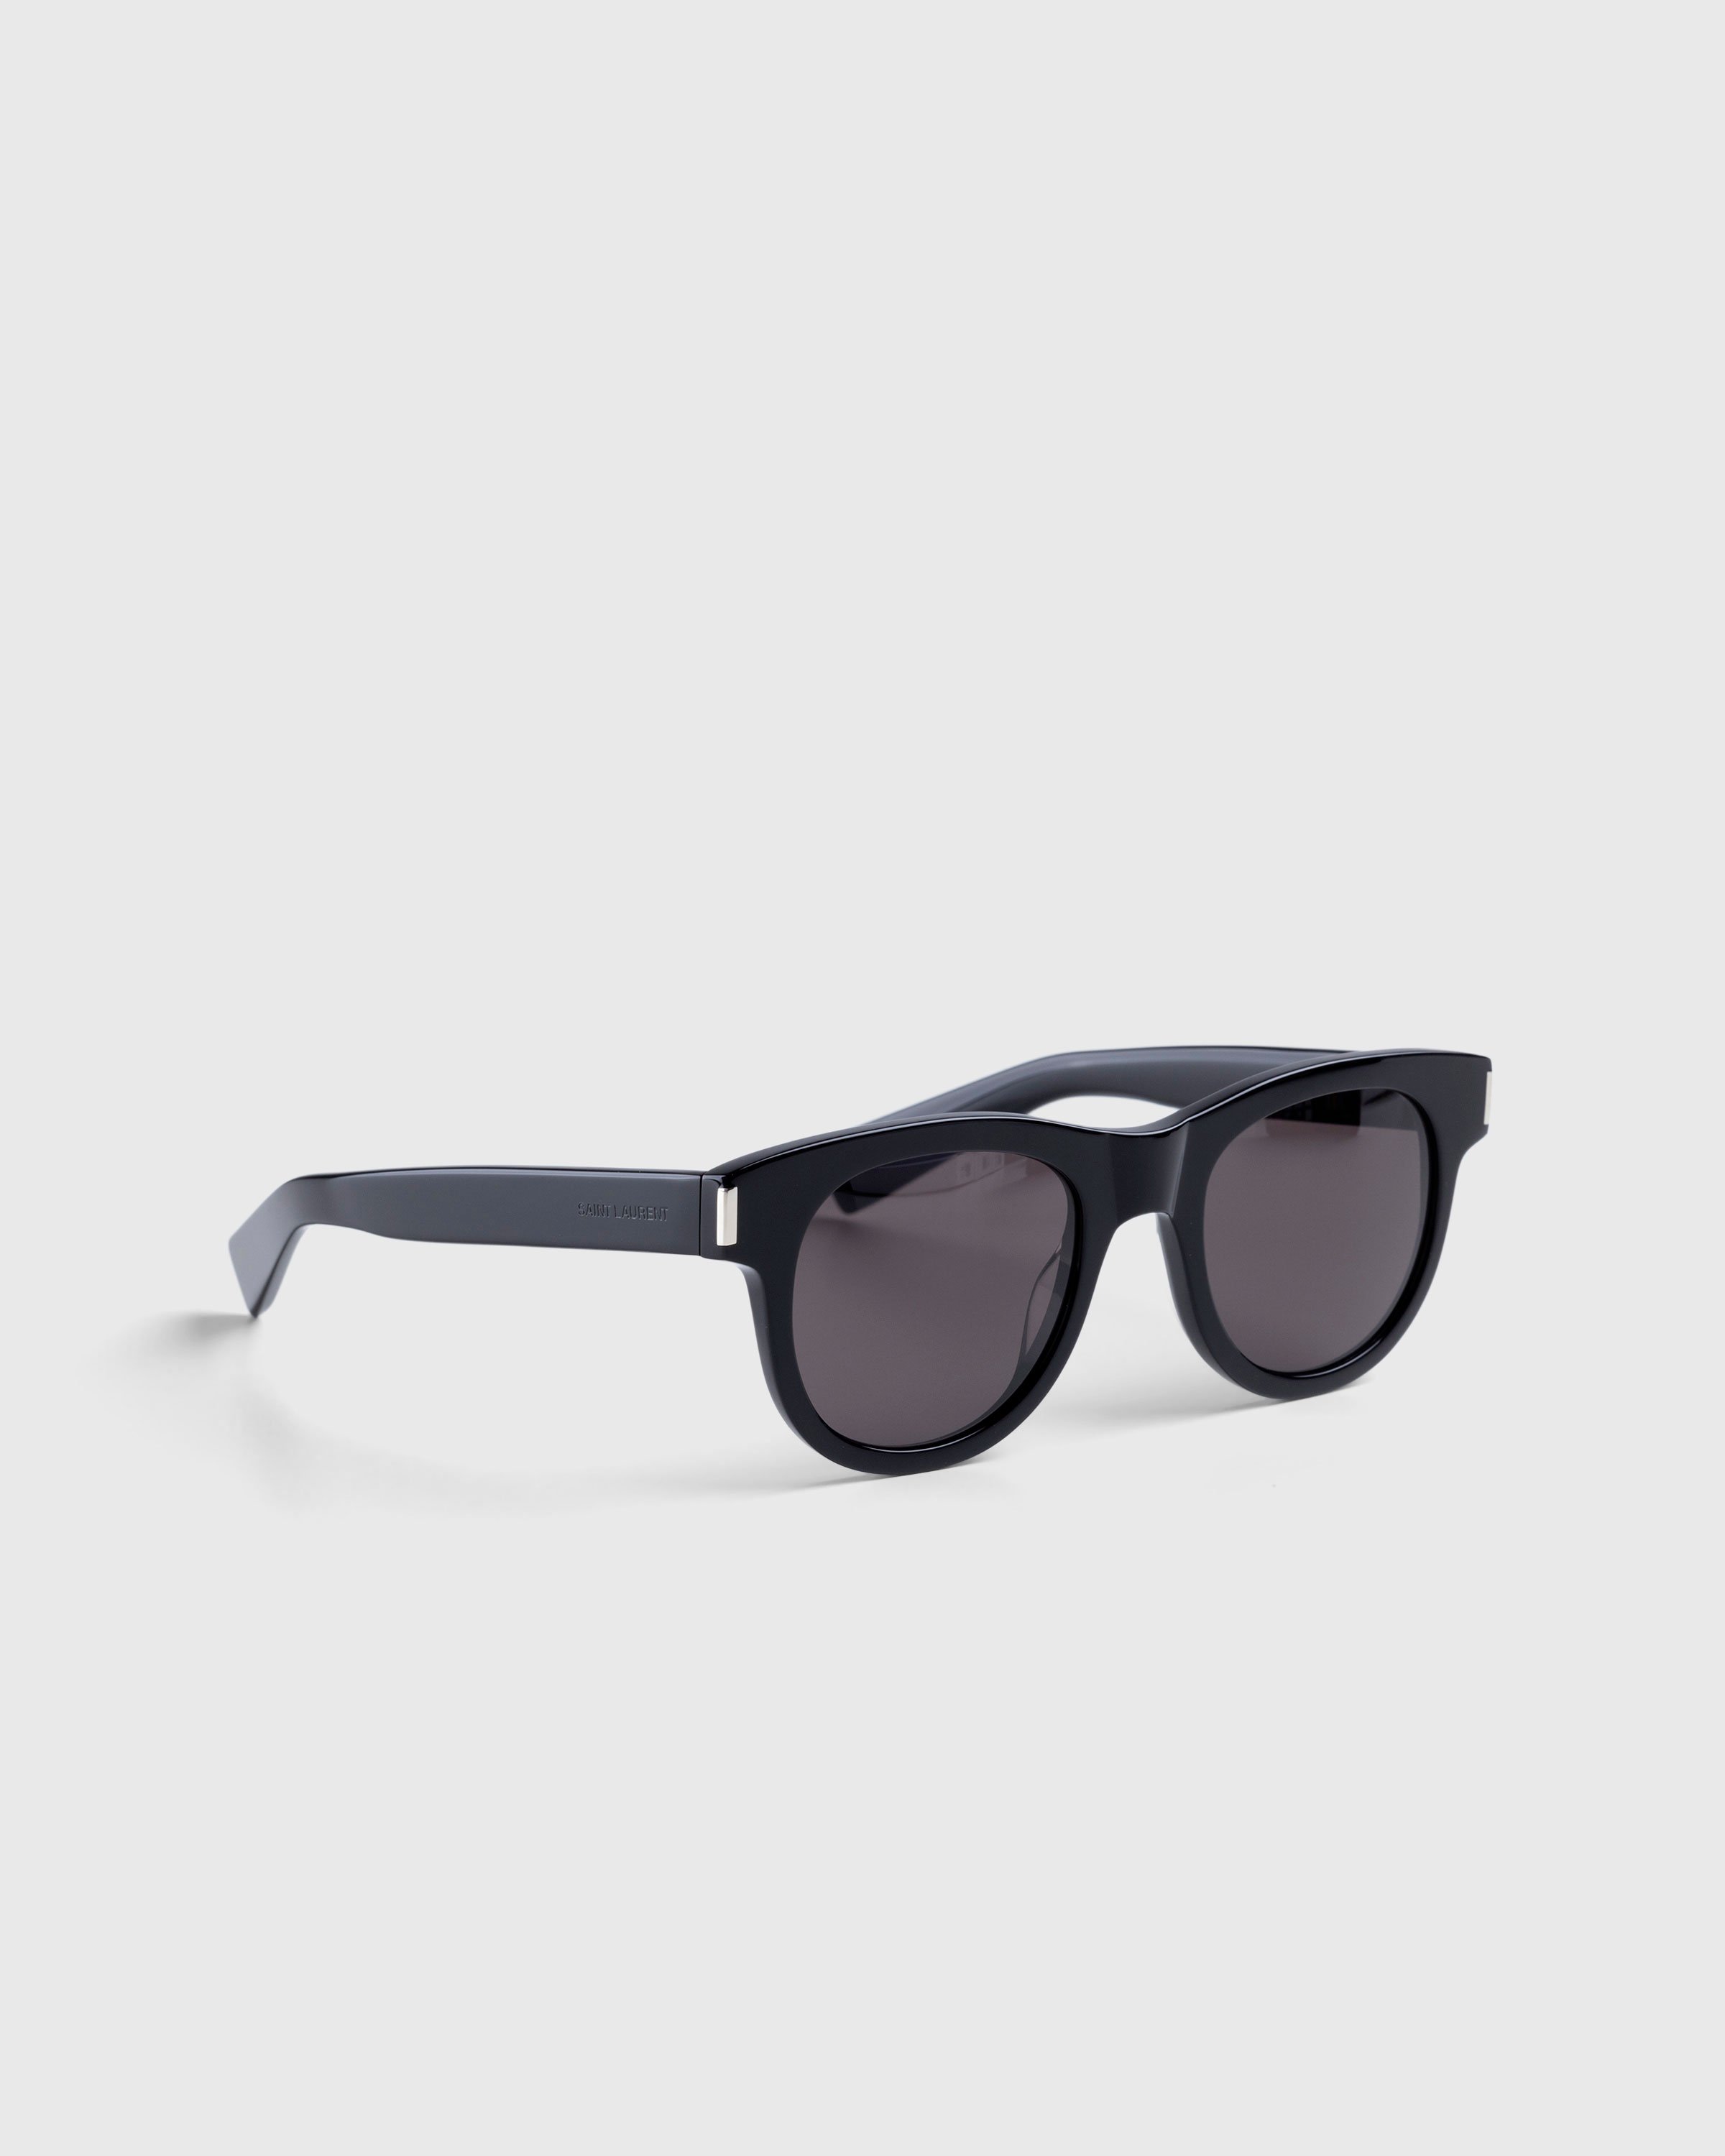 Saint Laurent - SL 571 Round Frame Sunglasses Black - Accessories - Black - Image 2